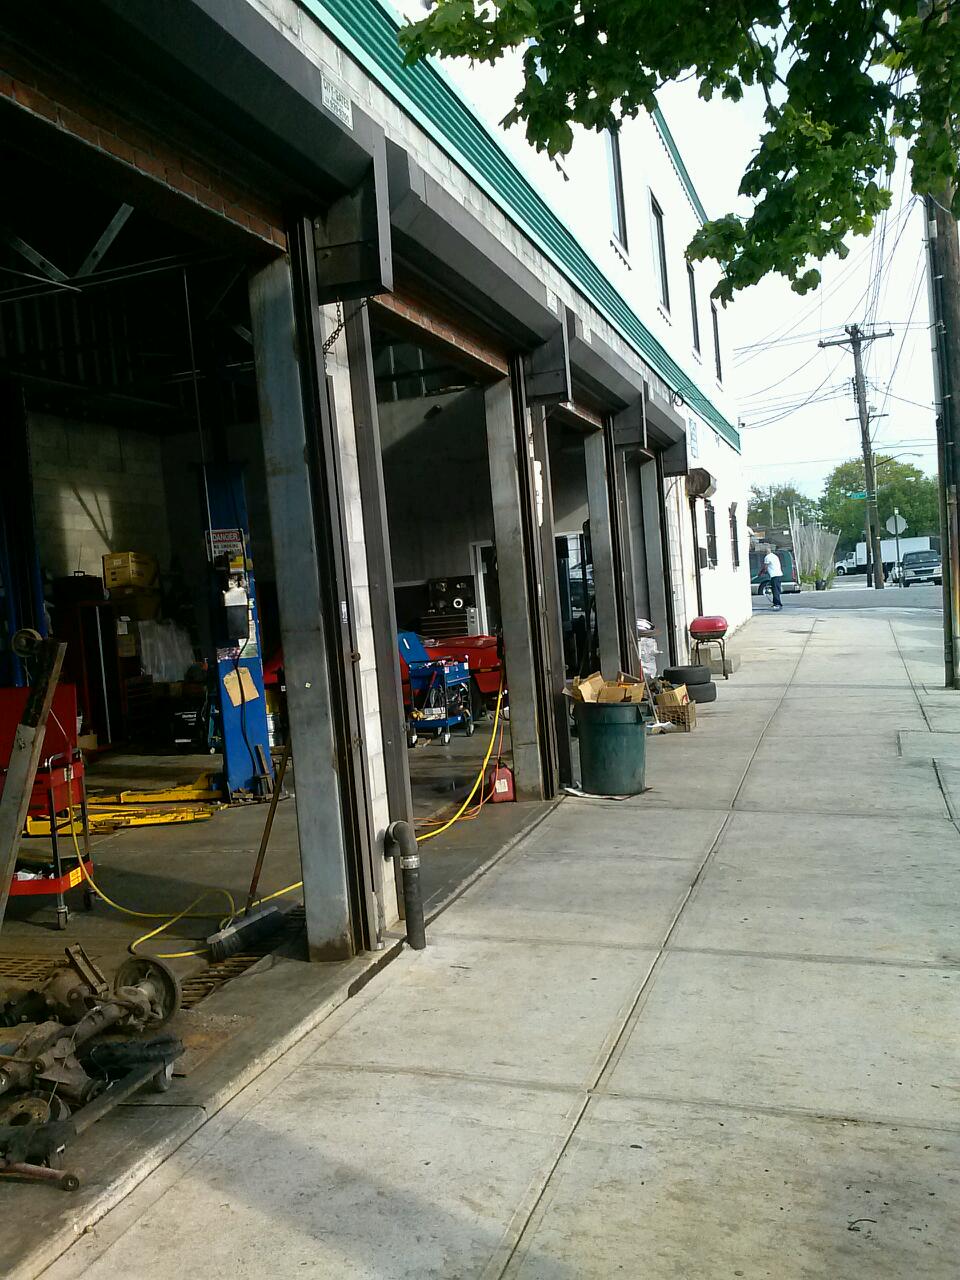 Photo of D R Auto Repair & Body Shop in Jamaica City, New York, United States - 1 Picture of Point of interest, Establishment, Car repair